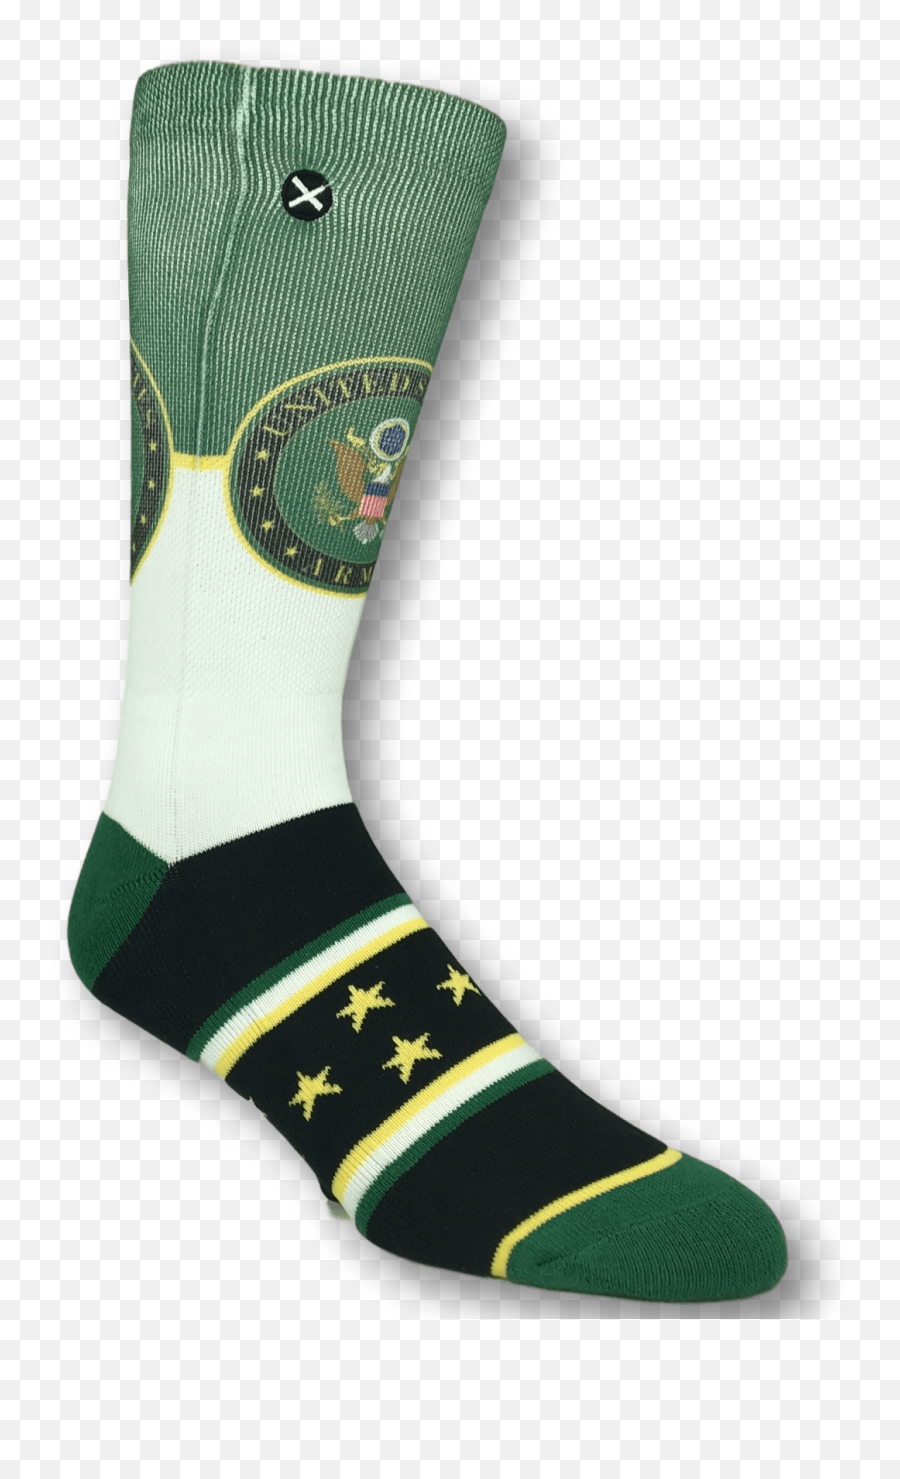 Army Emblem Printed Socks By Odd Sox - Unisex Emoji,Odd Sox Emoji Socks